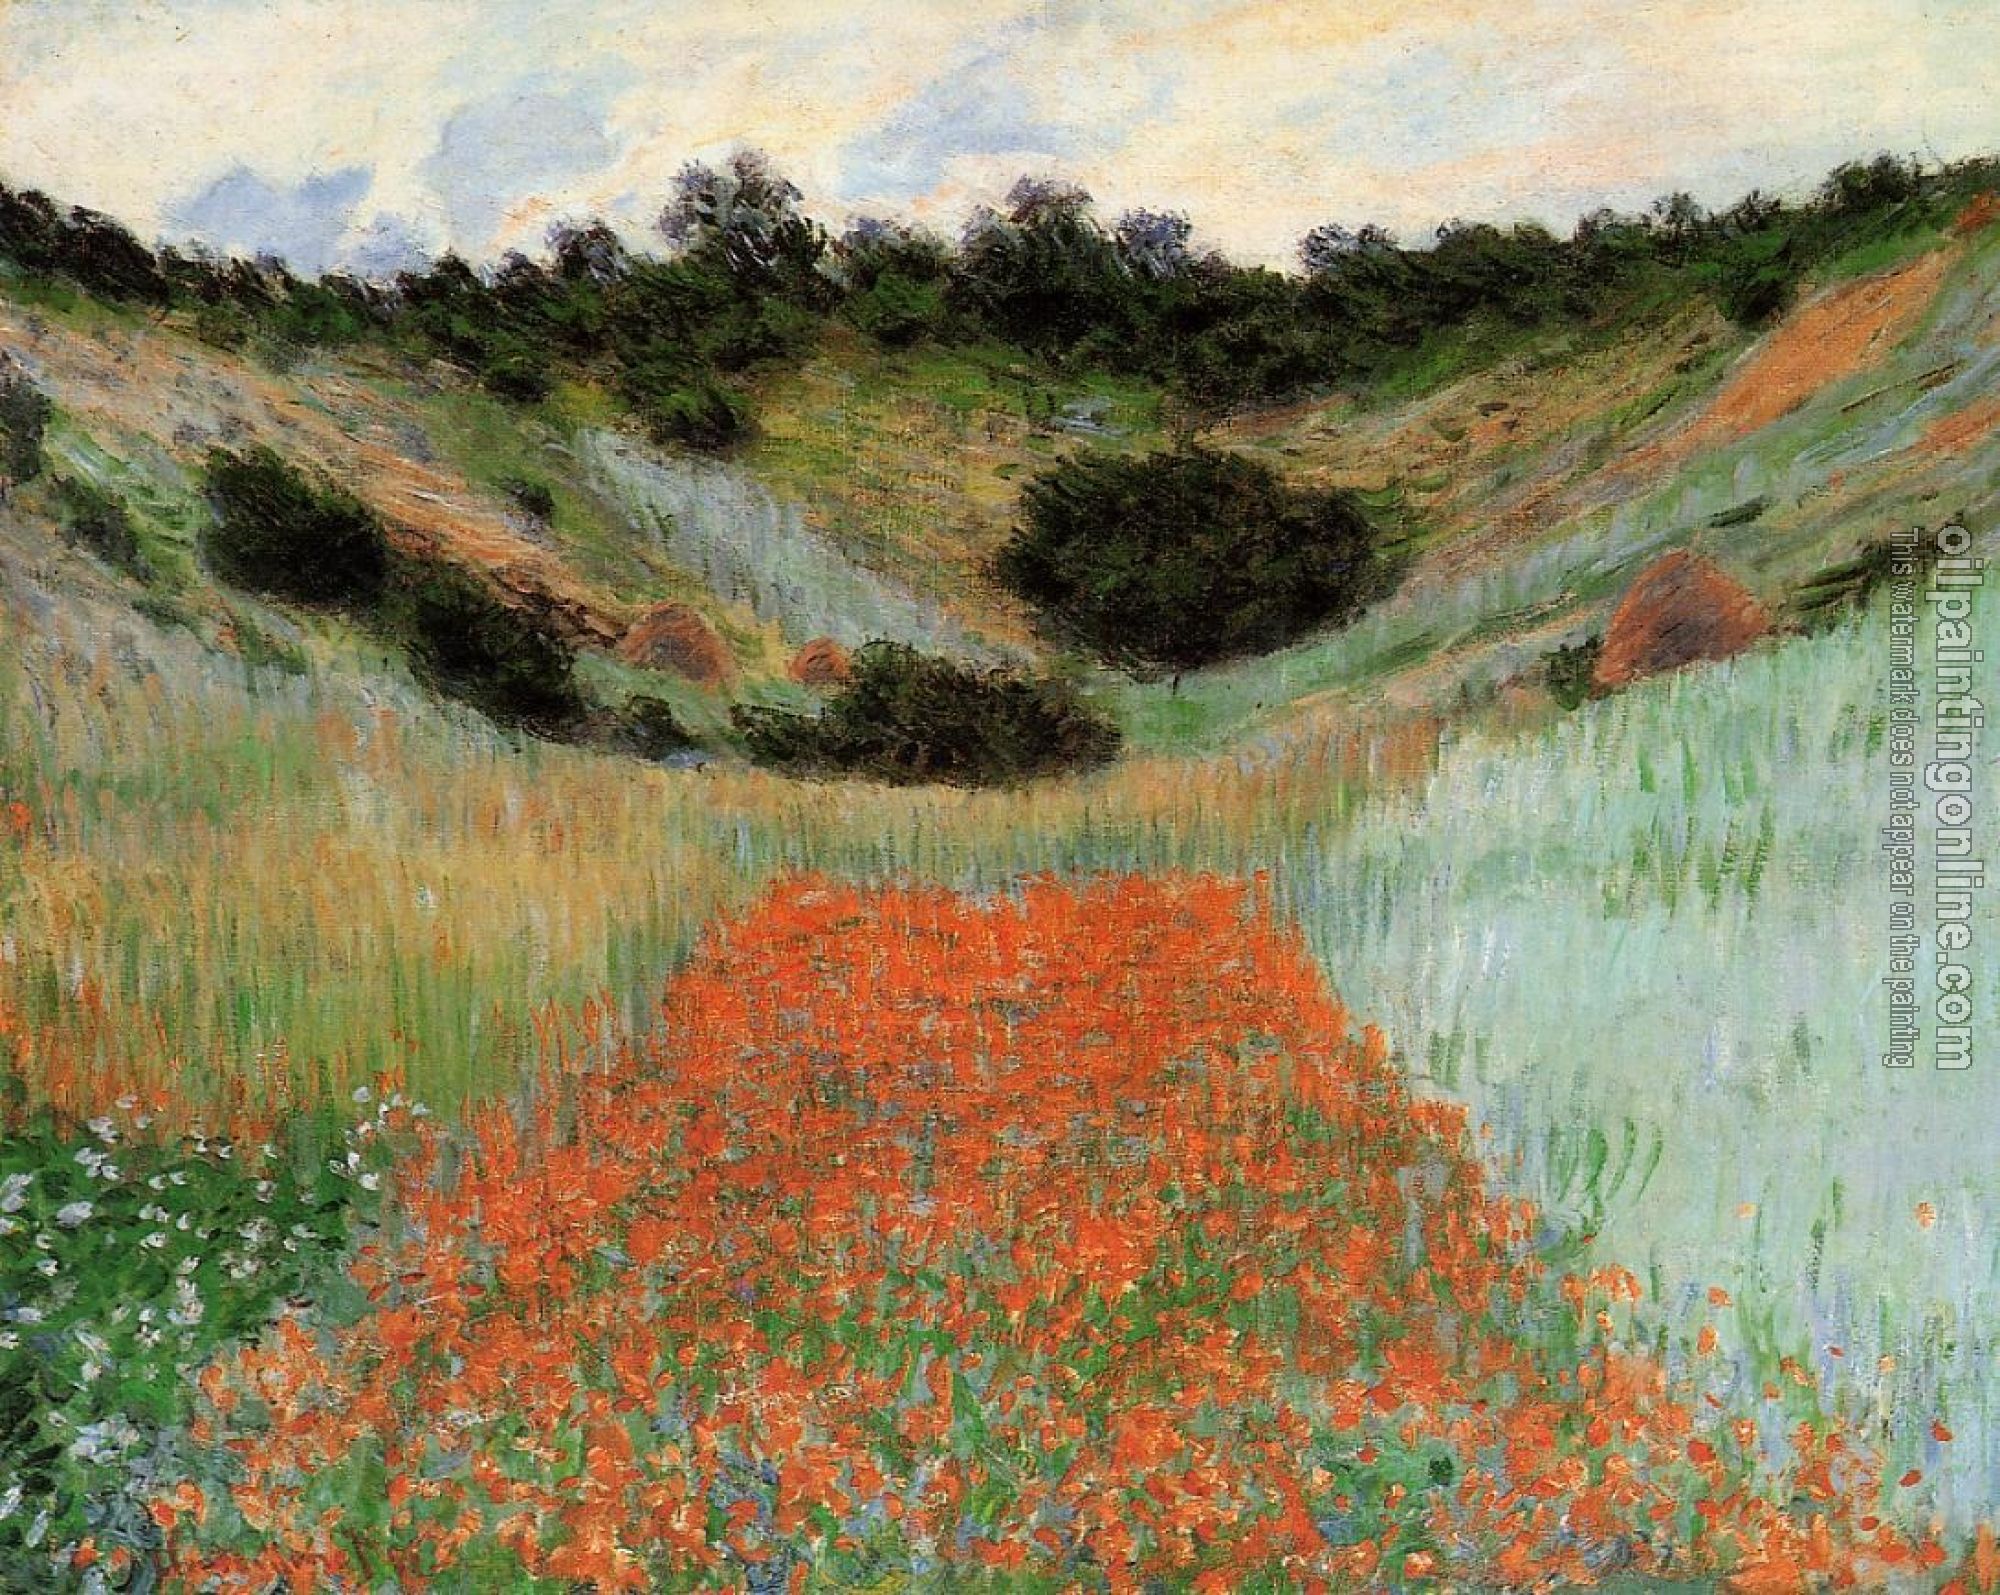 Monet, Claude Oscar - Poppy Field in a Hollow near Giverny